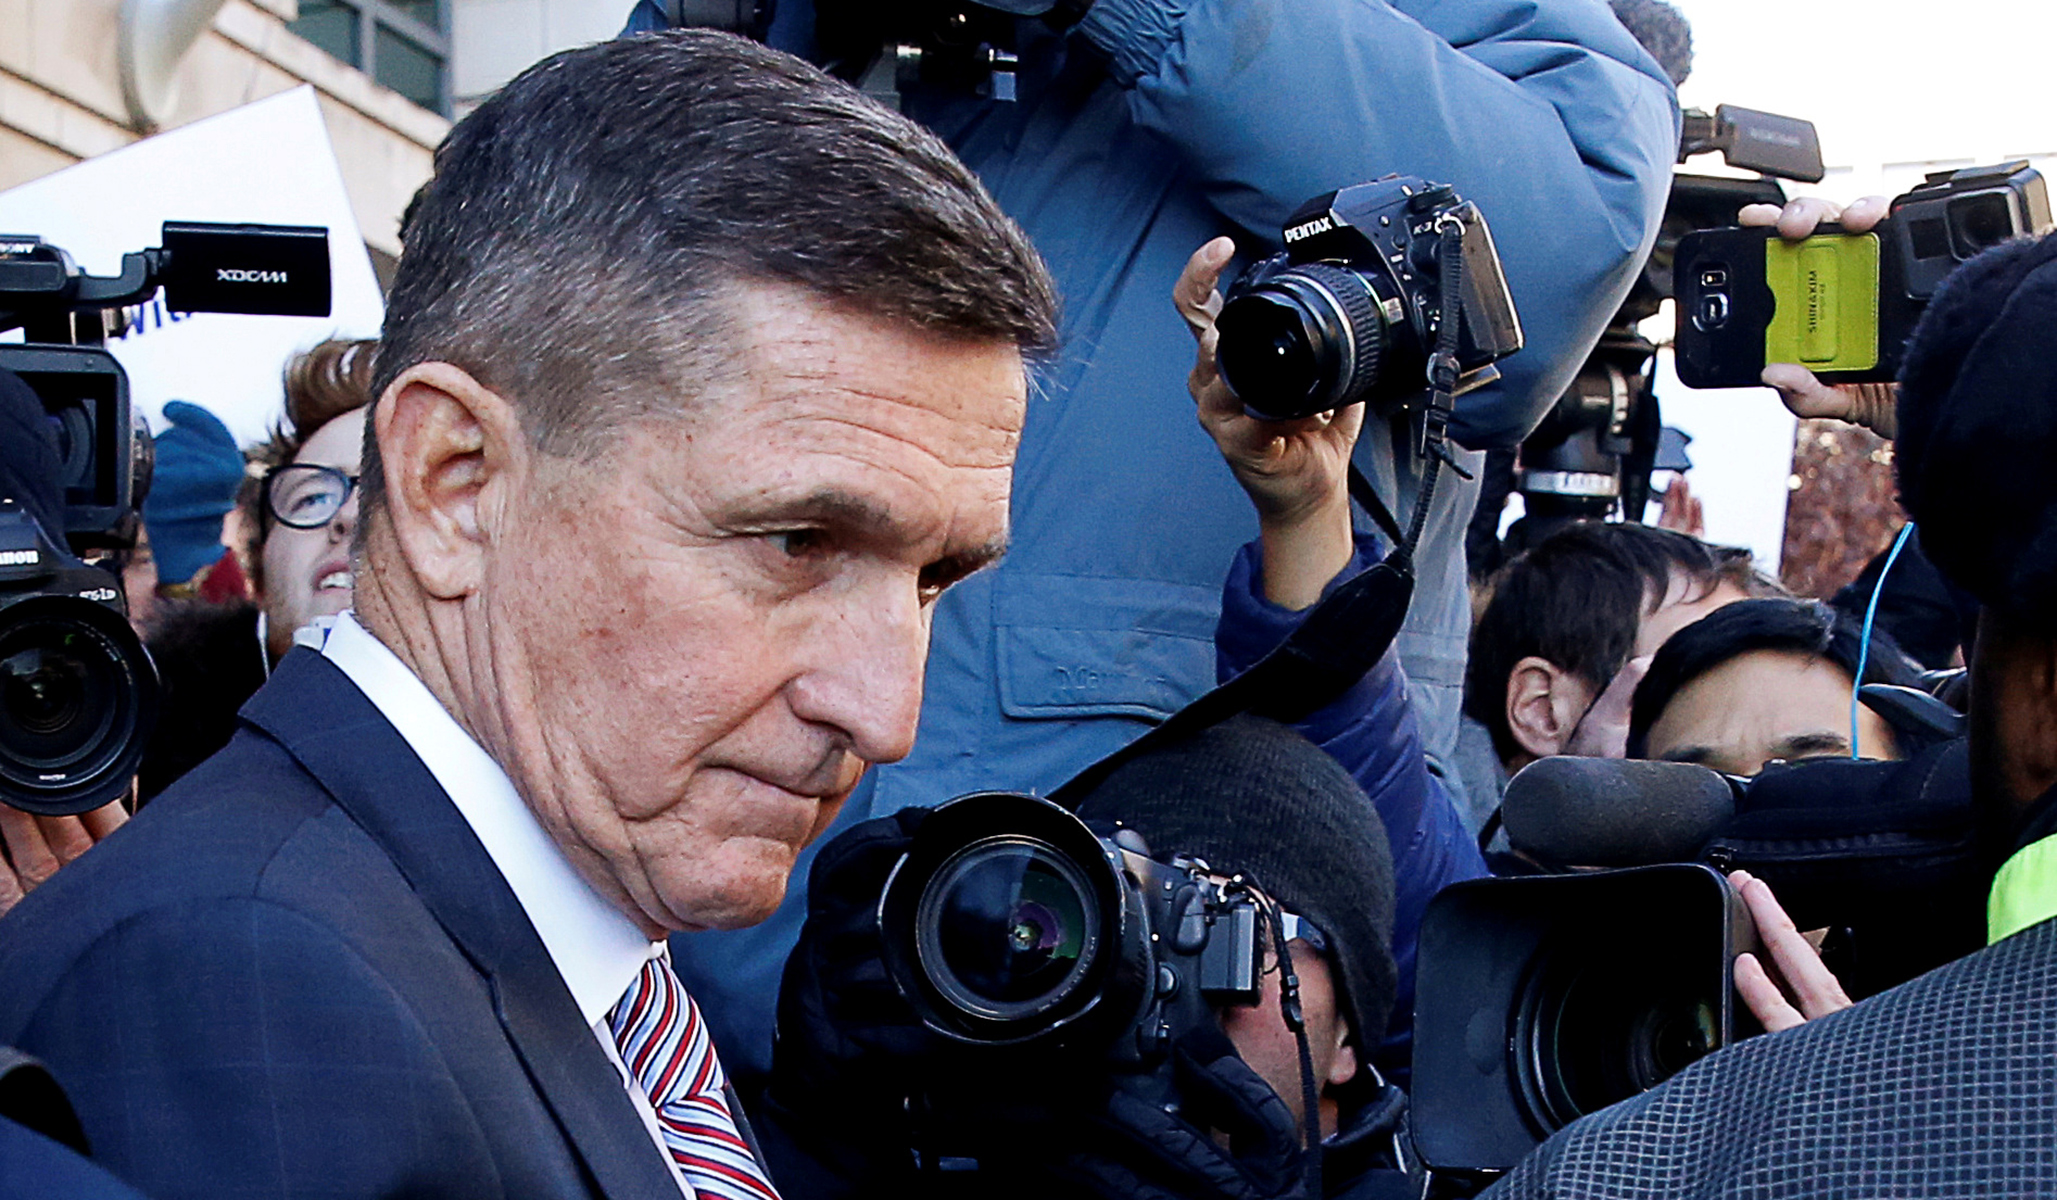 Former U.S. national security adviser Flynn leaves court house